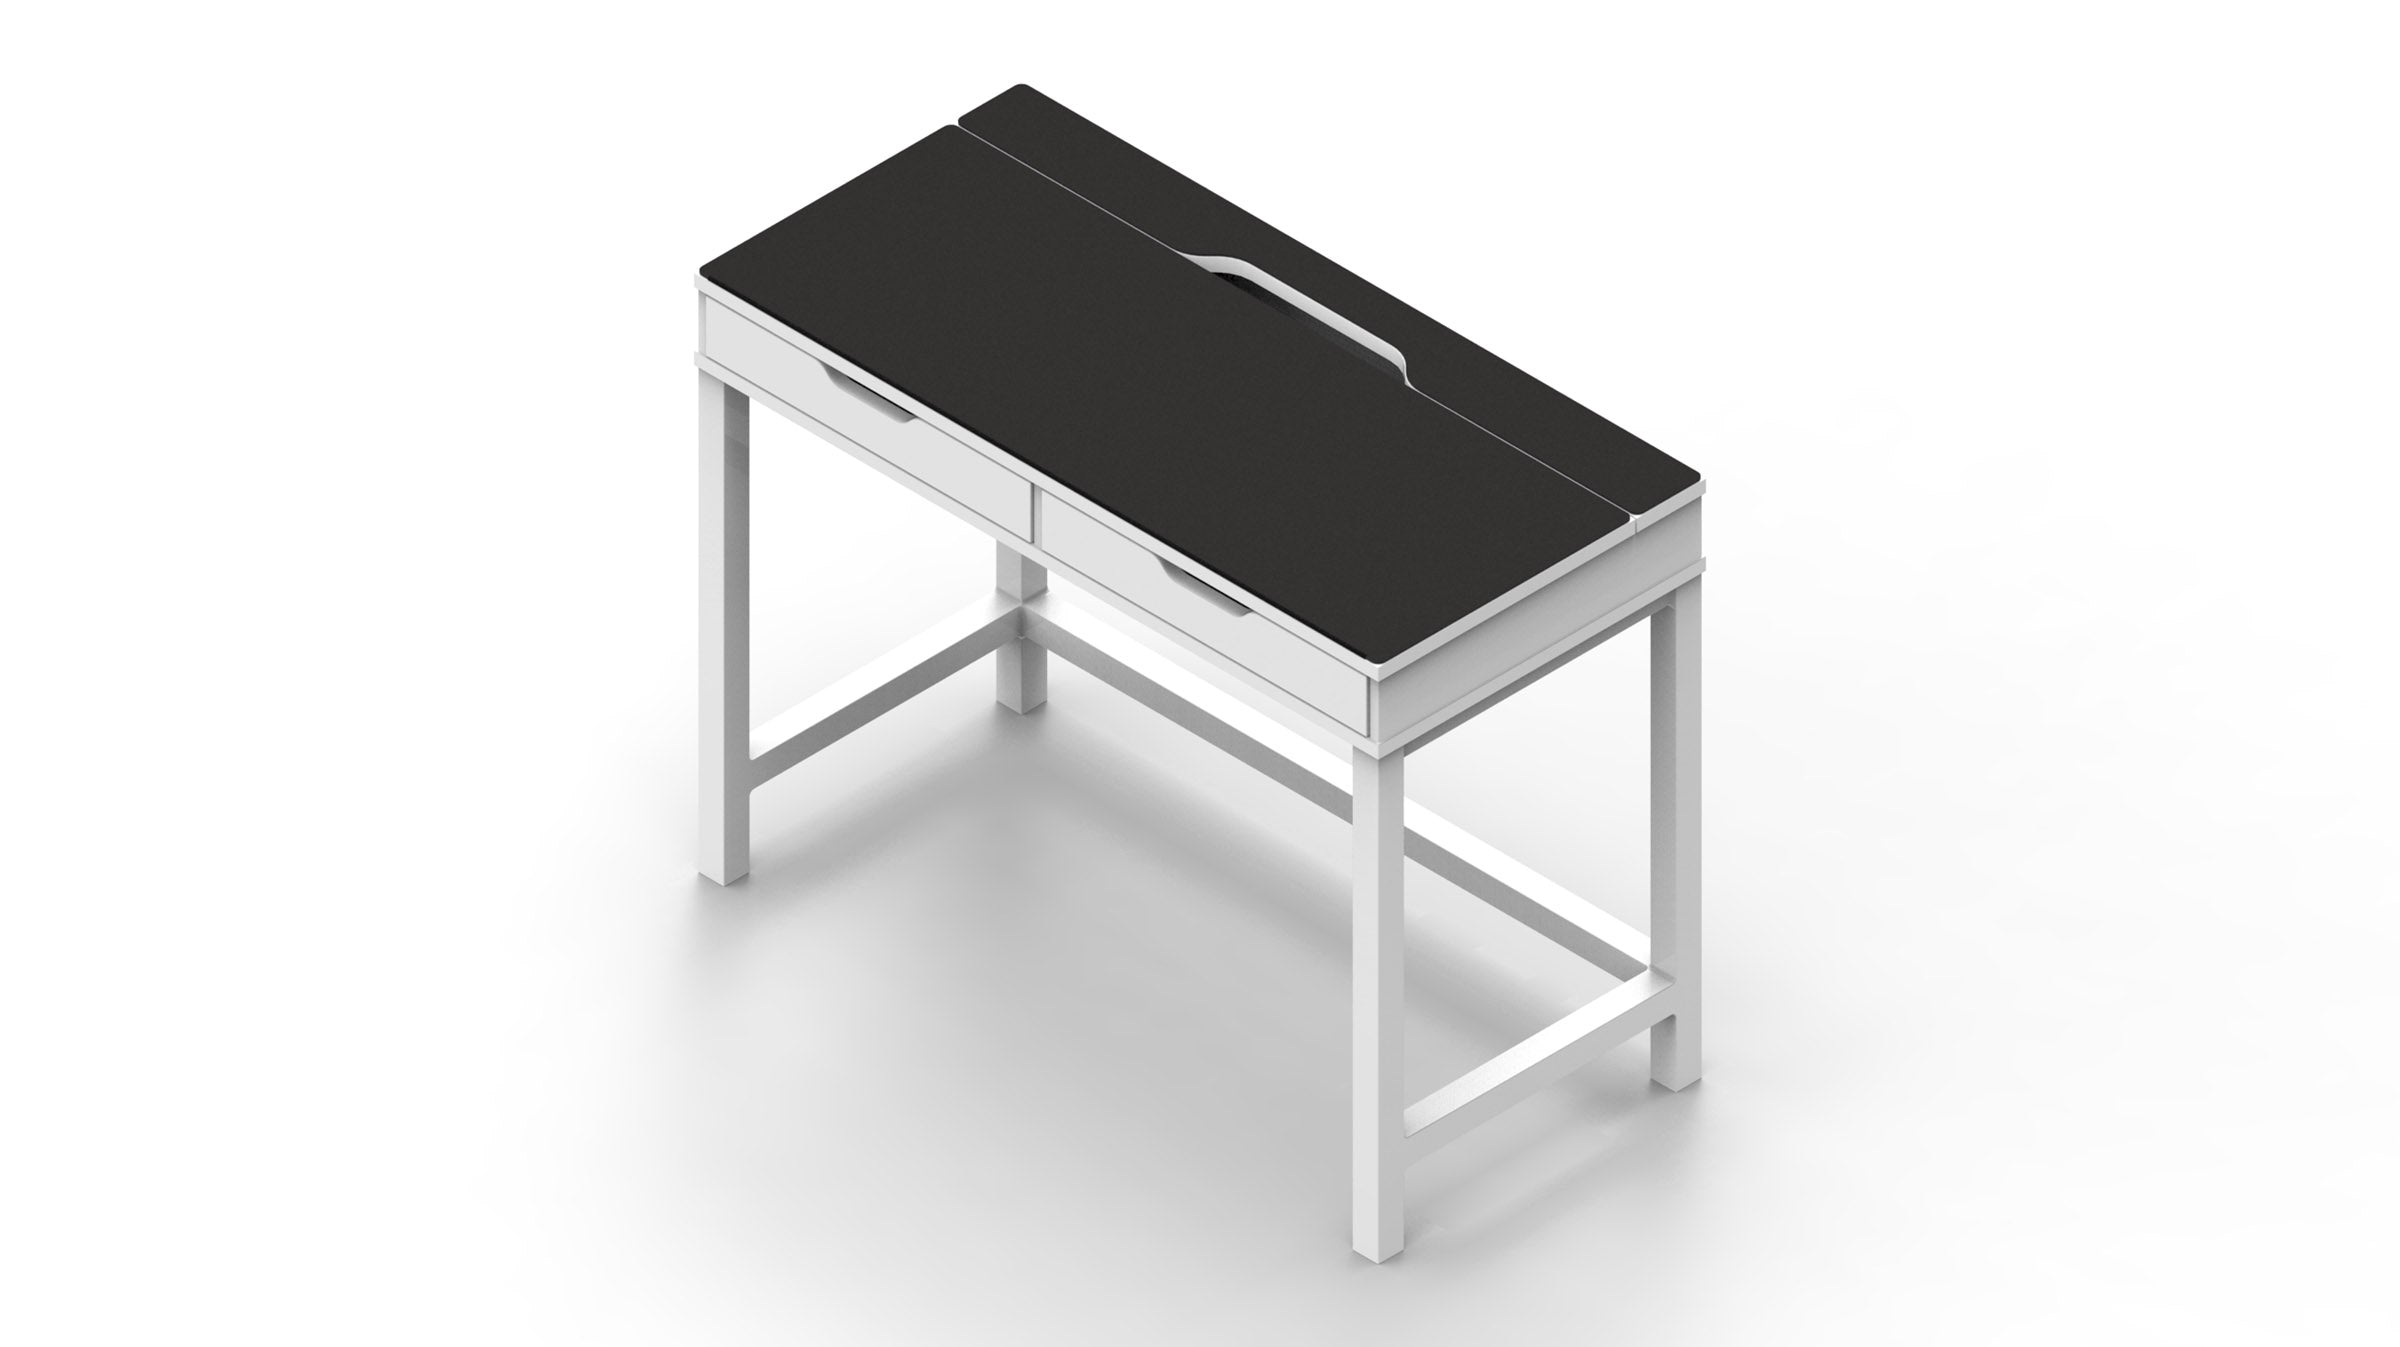 MK Black IKEA ALEX Desk Mat (39" / 100 cm) Full-desk Mouse Pad MKDL9OZ5EB |0|